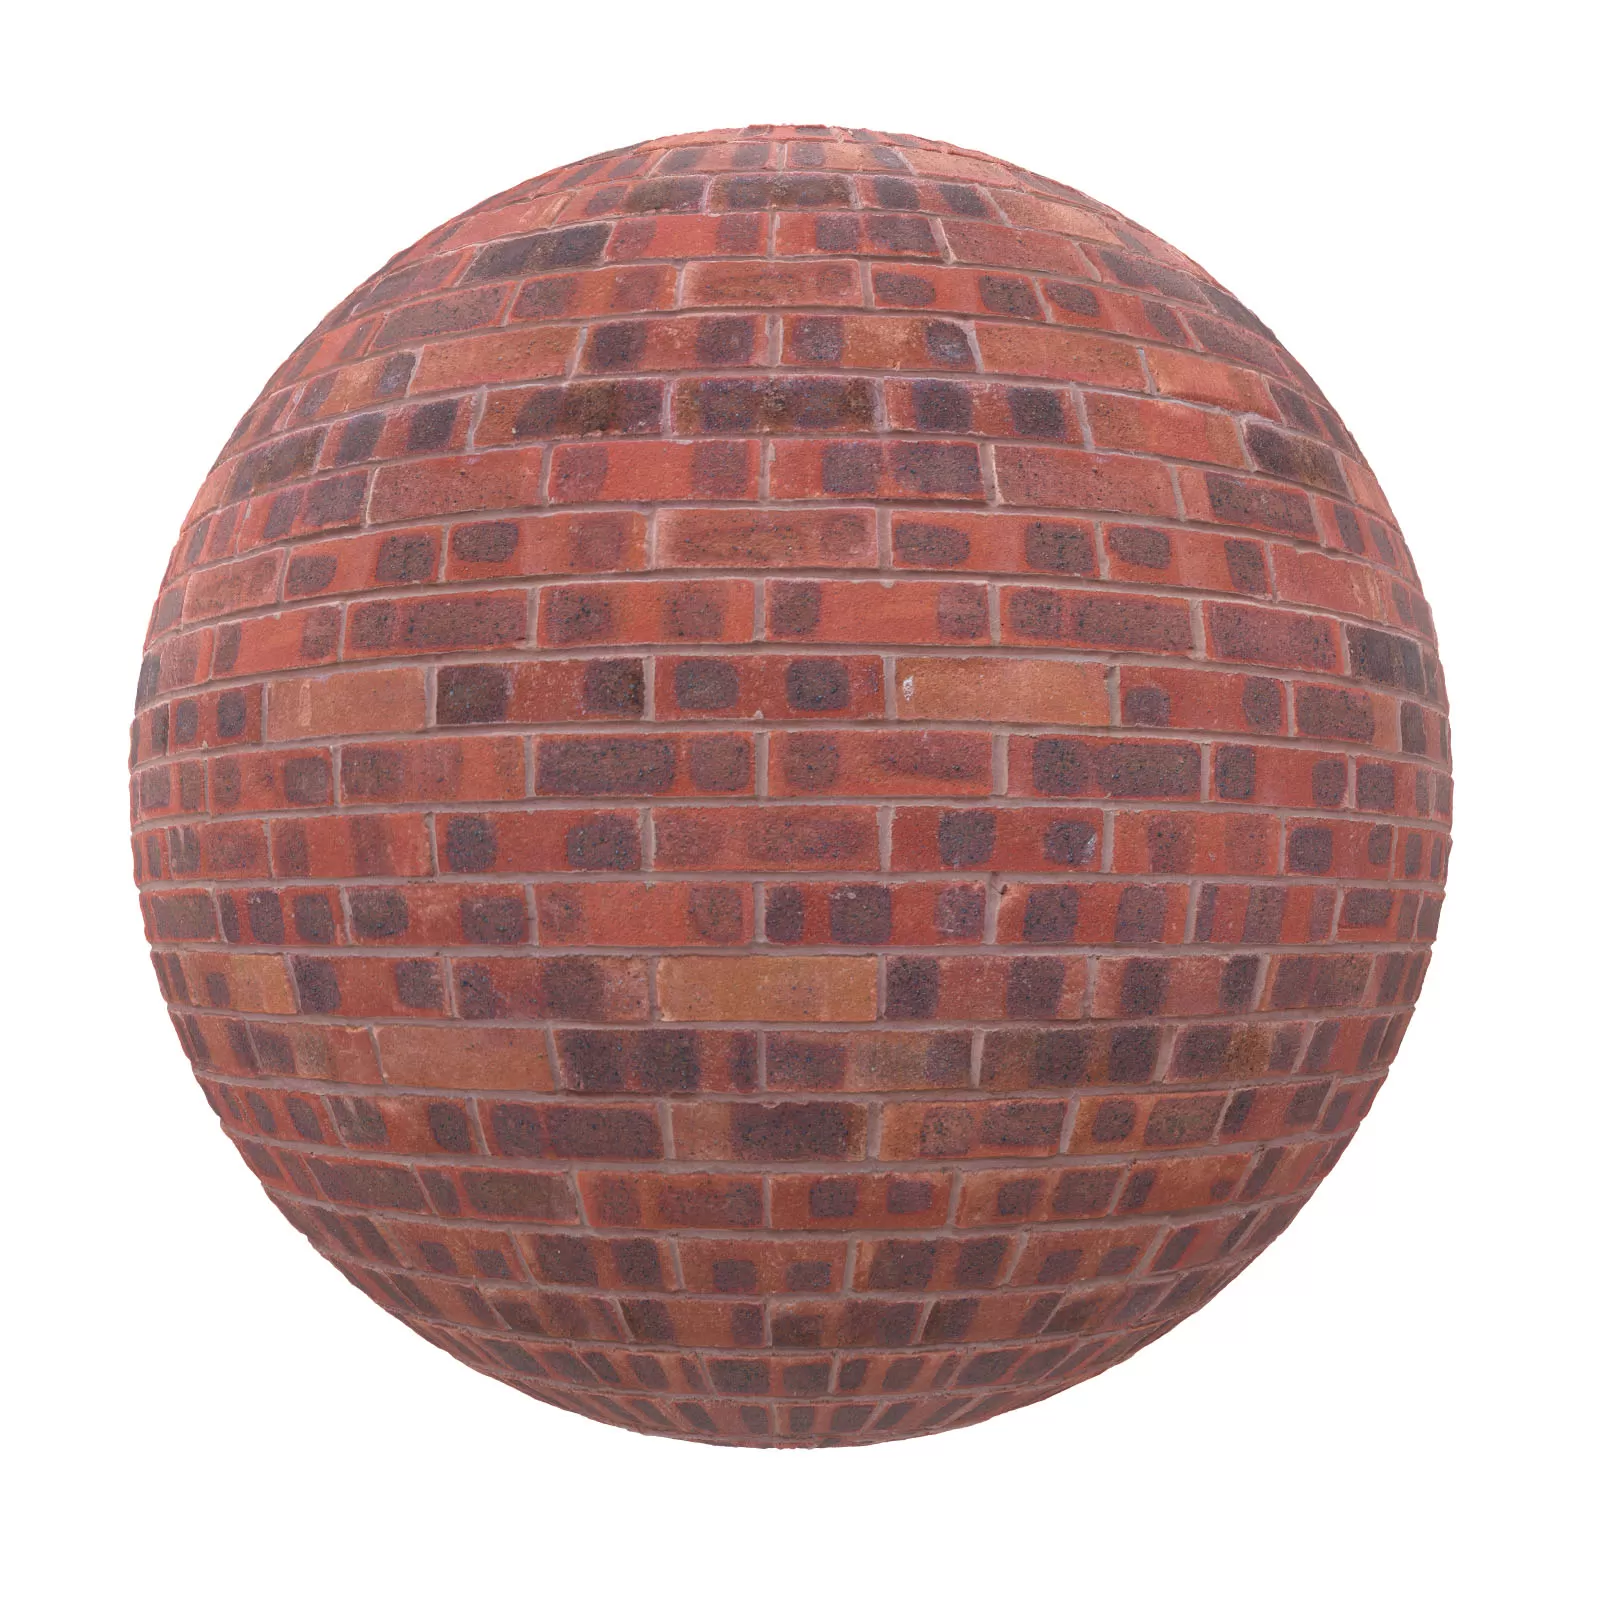 PBR CGAXIS TEXTURES – BRICK – Red Brick Wall 8